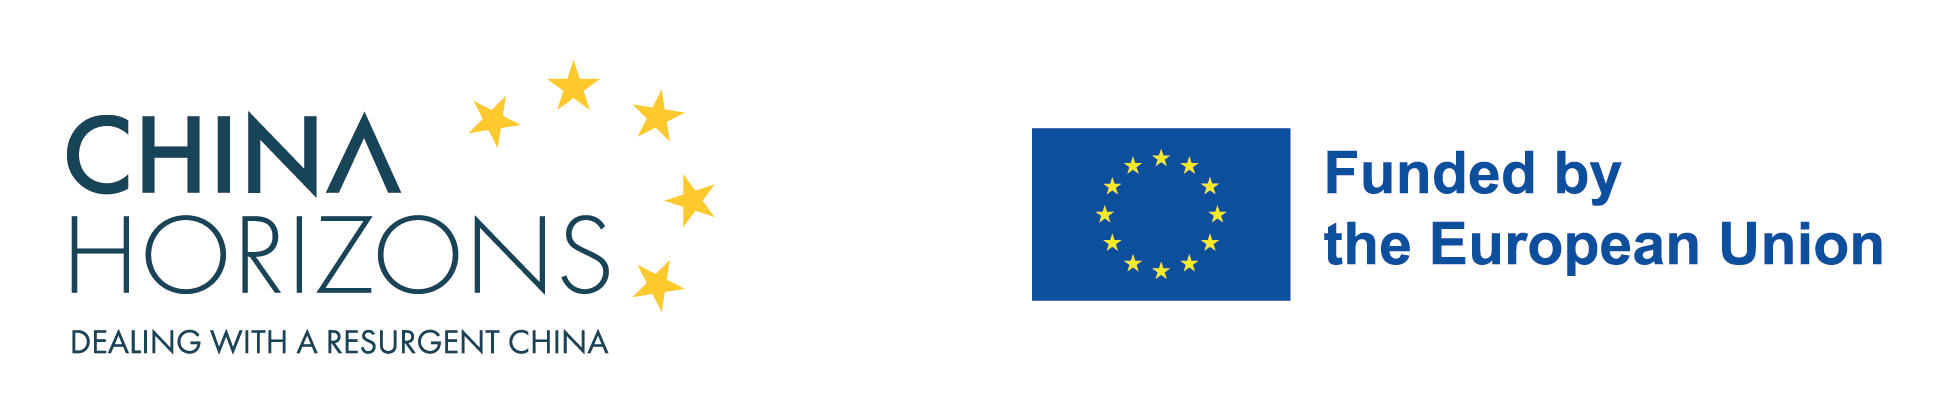 Logos China Horizon, Funded by the European Union